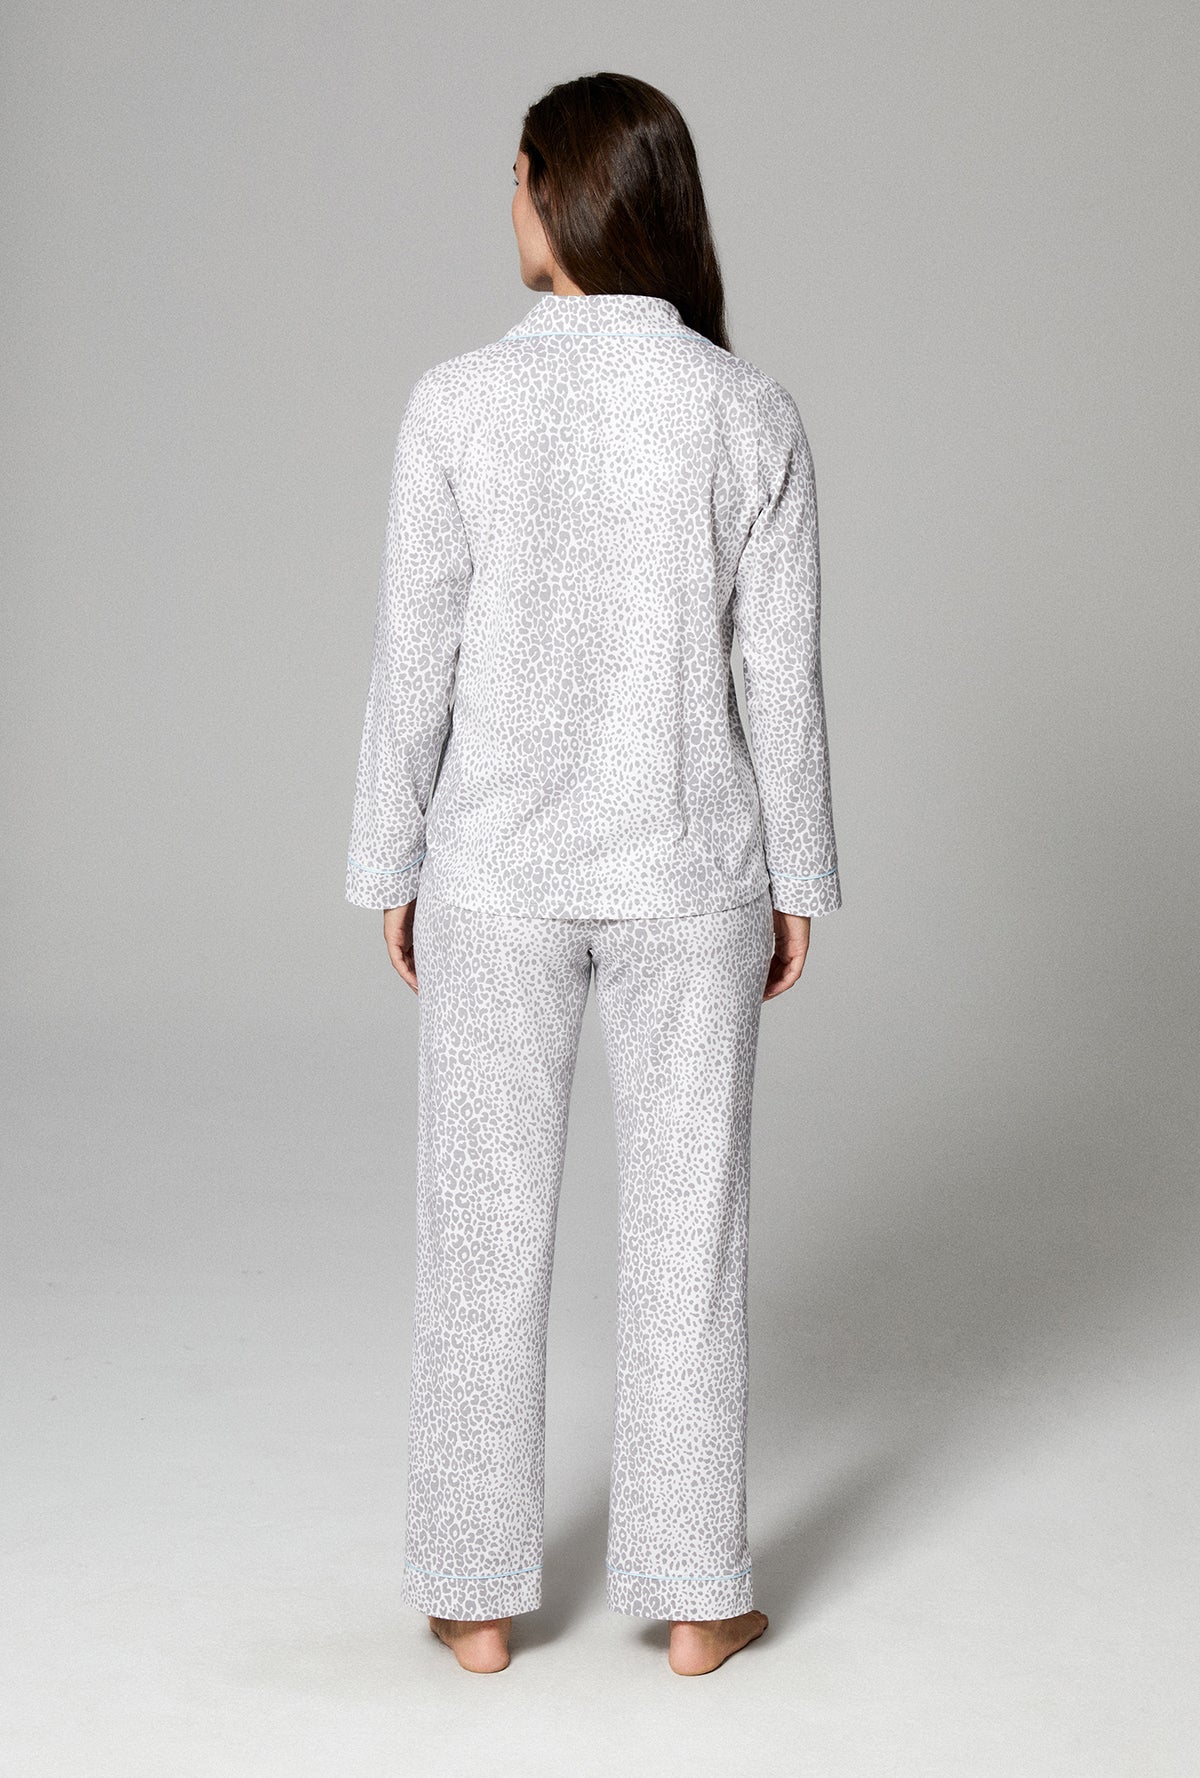 Snowcat Long Sleeve Classic Stretch Jersey PJ Set - Bedhead Pajamas | Pyjama-Sets